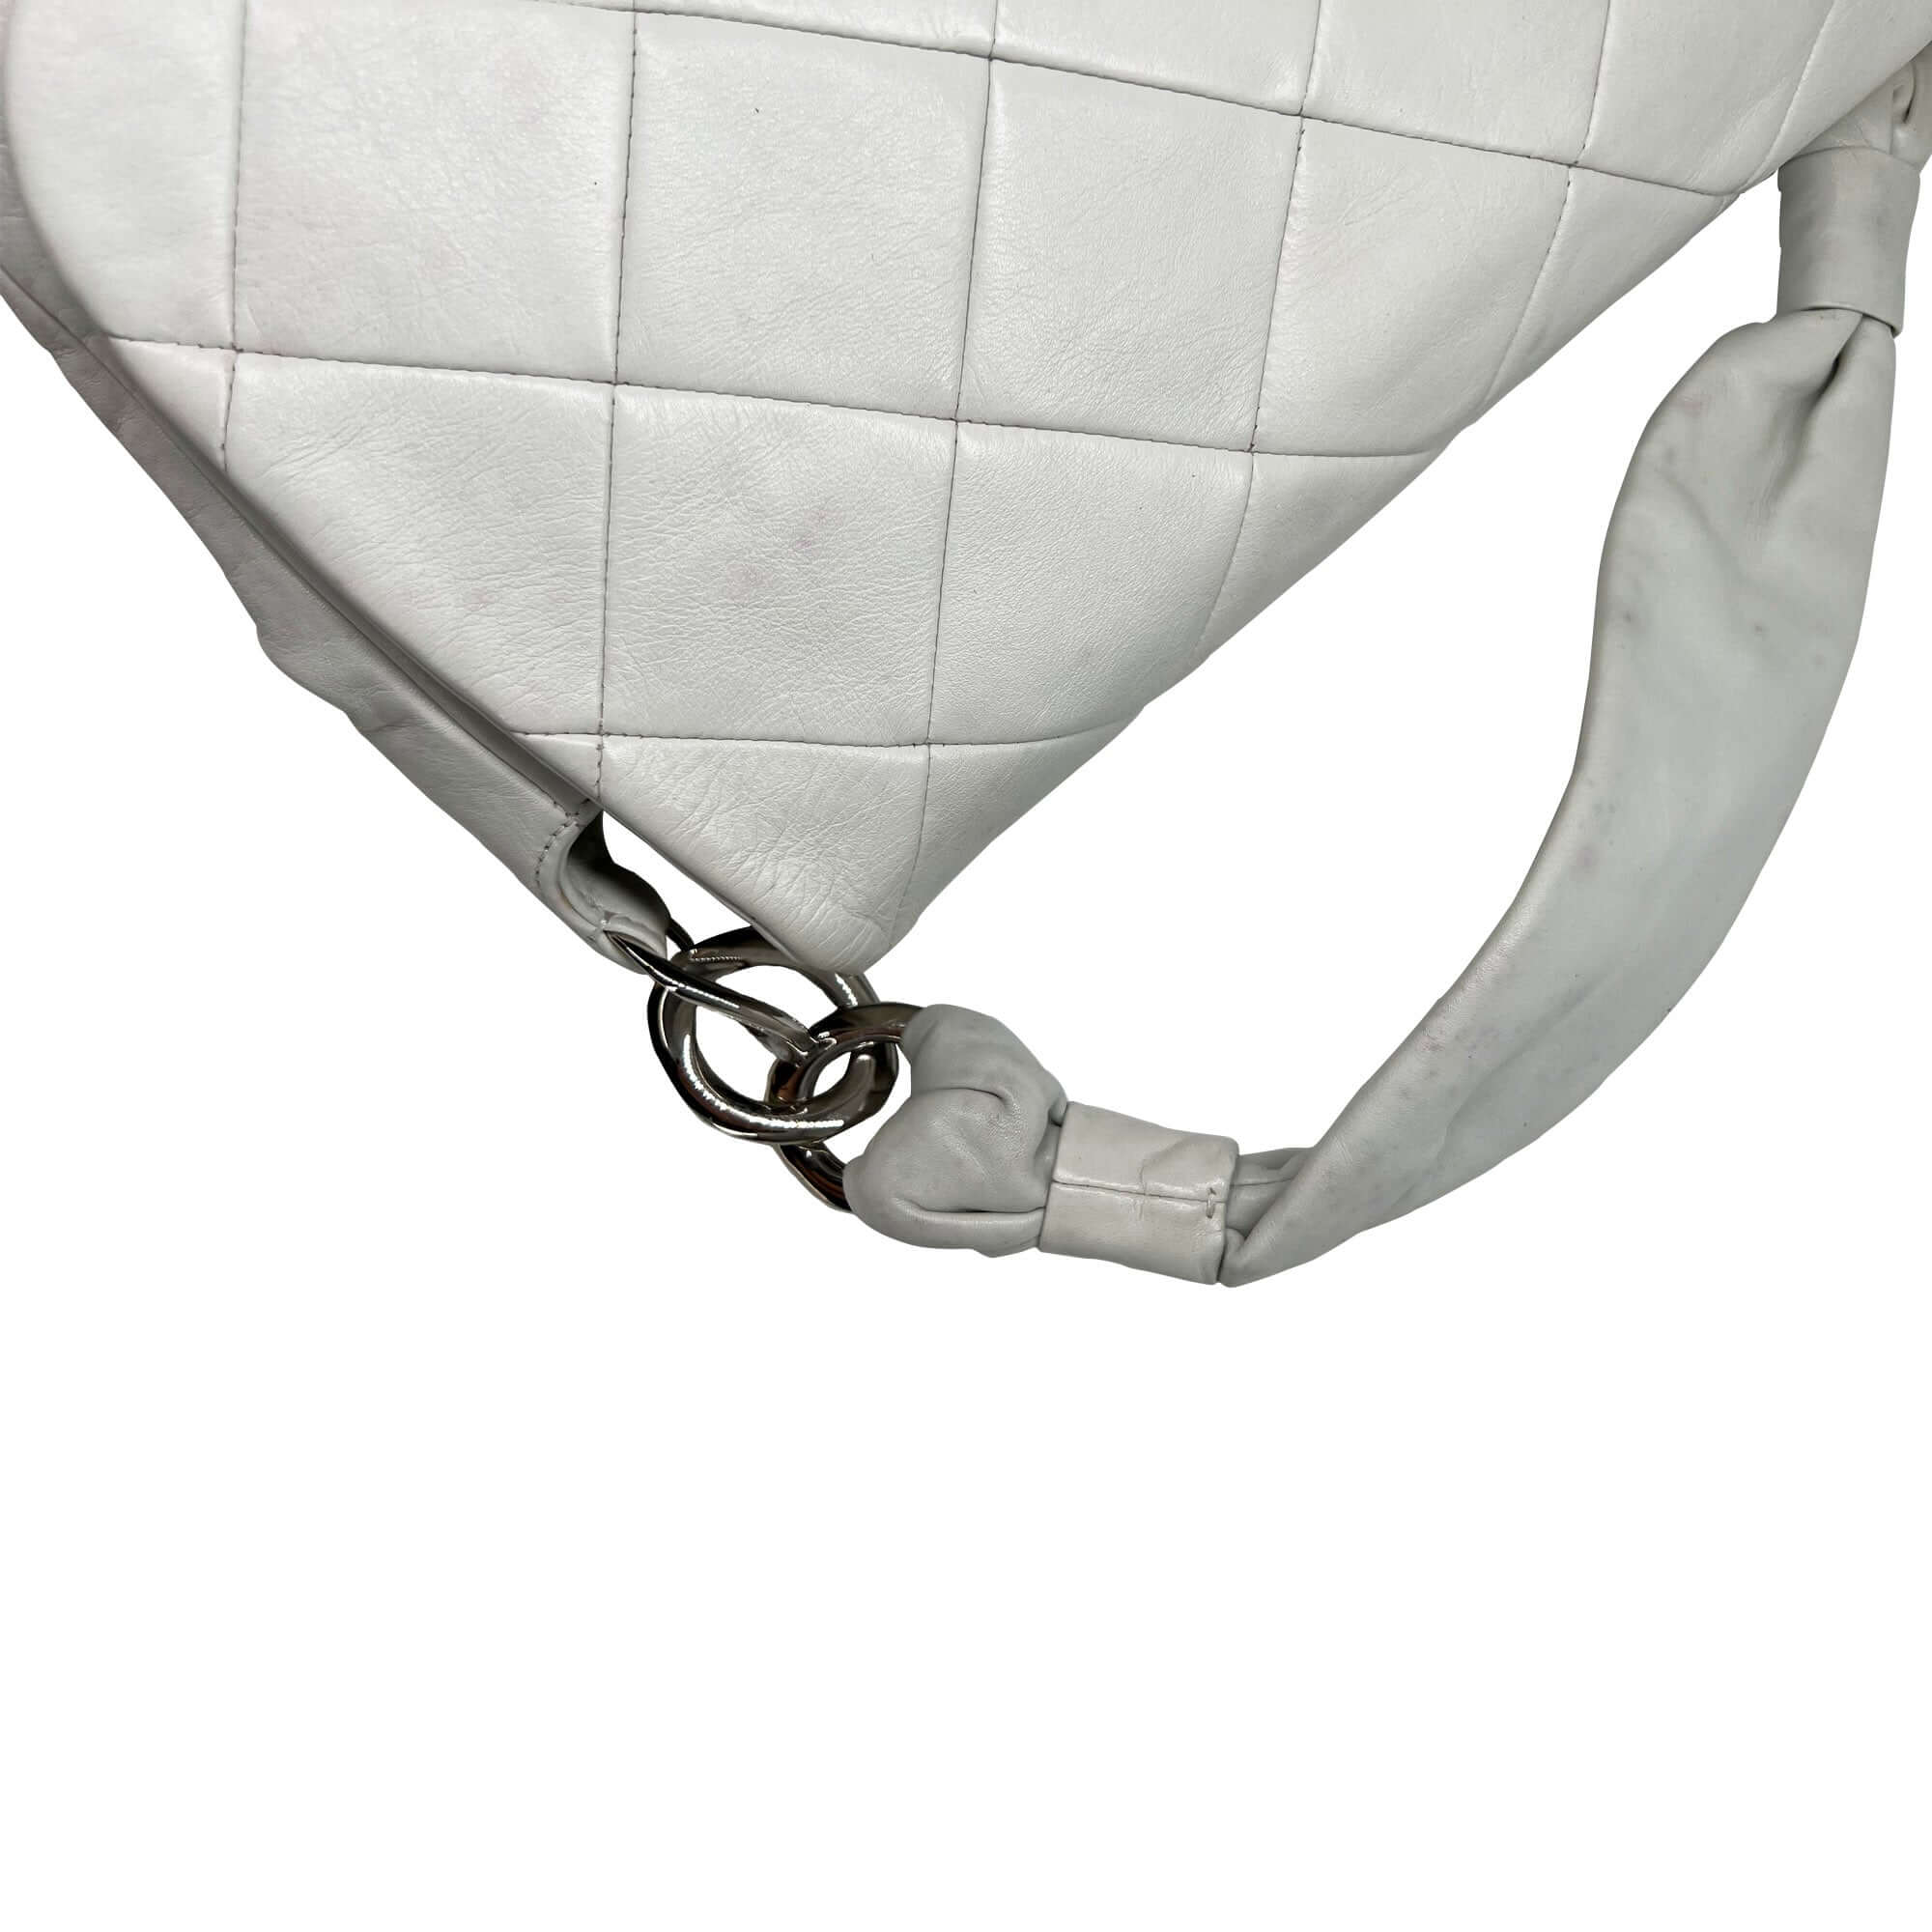 Chanel quilted flap cream calfskin leather shoulder bag